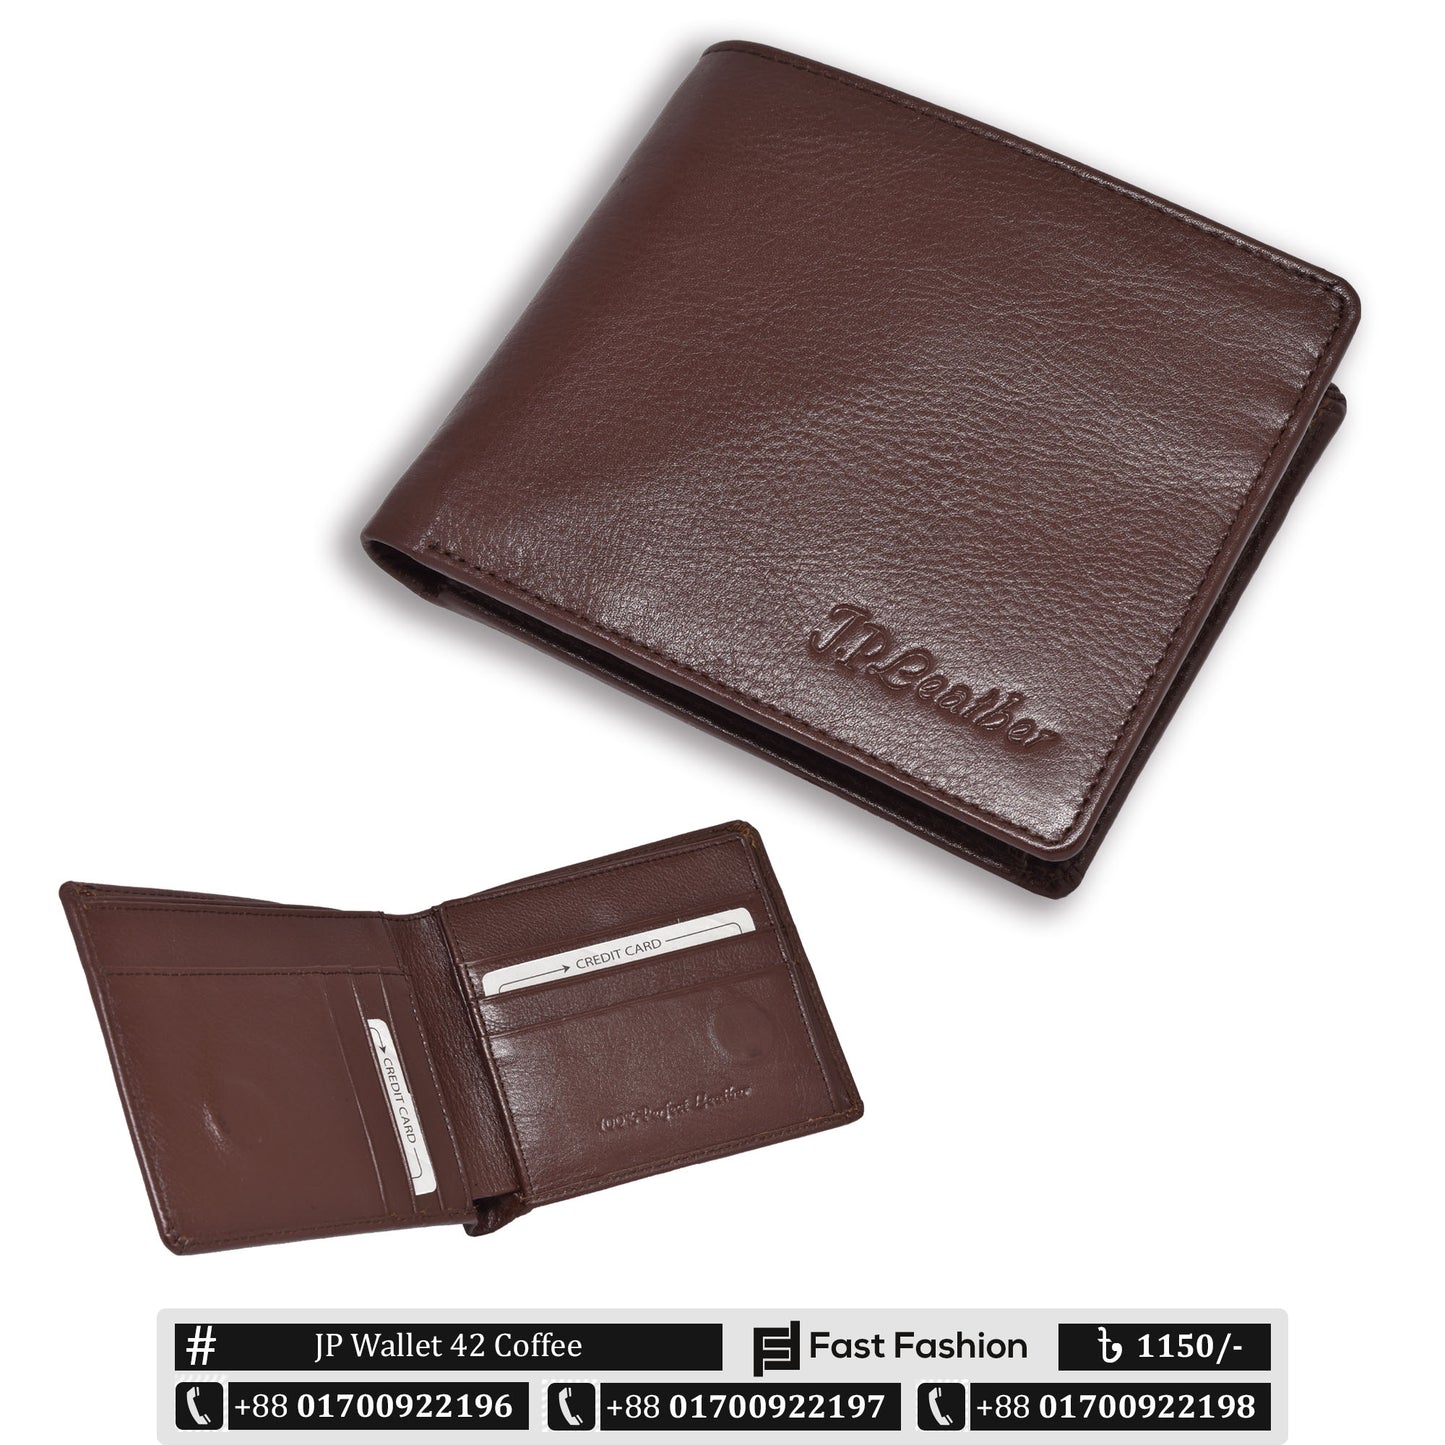 Original Leather Pocket Size Premium Quality Wallet | JP Wallet 42 Coffee